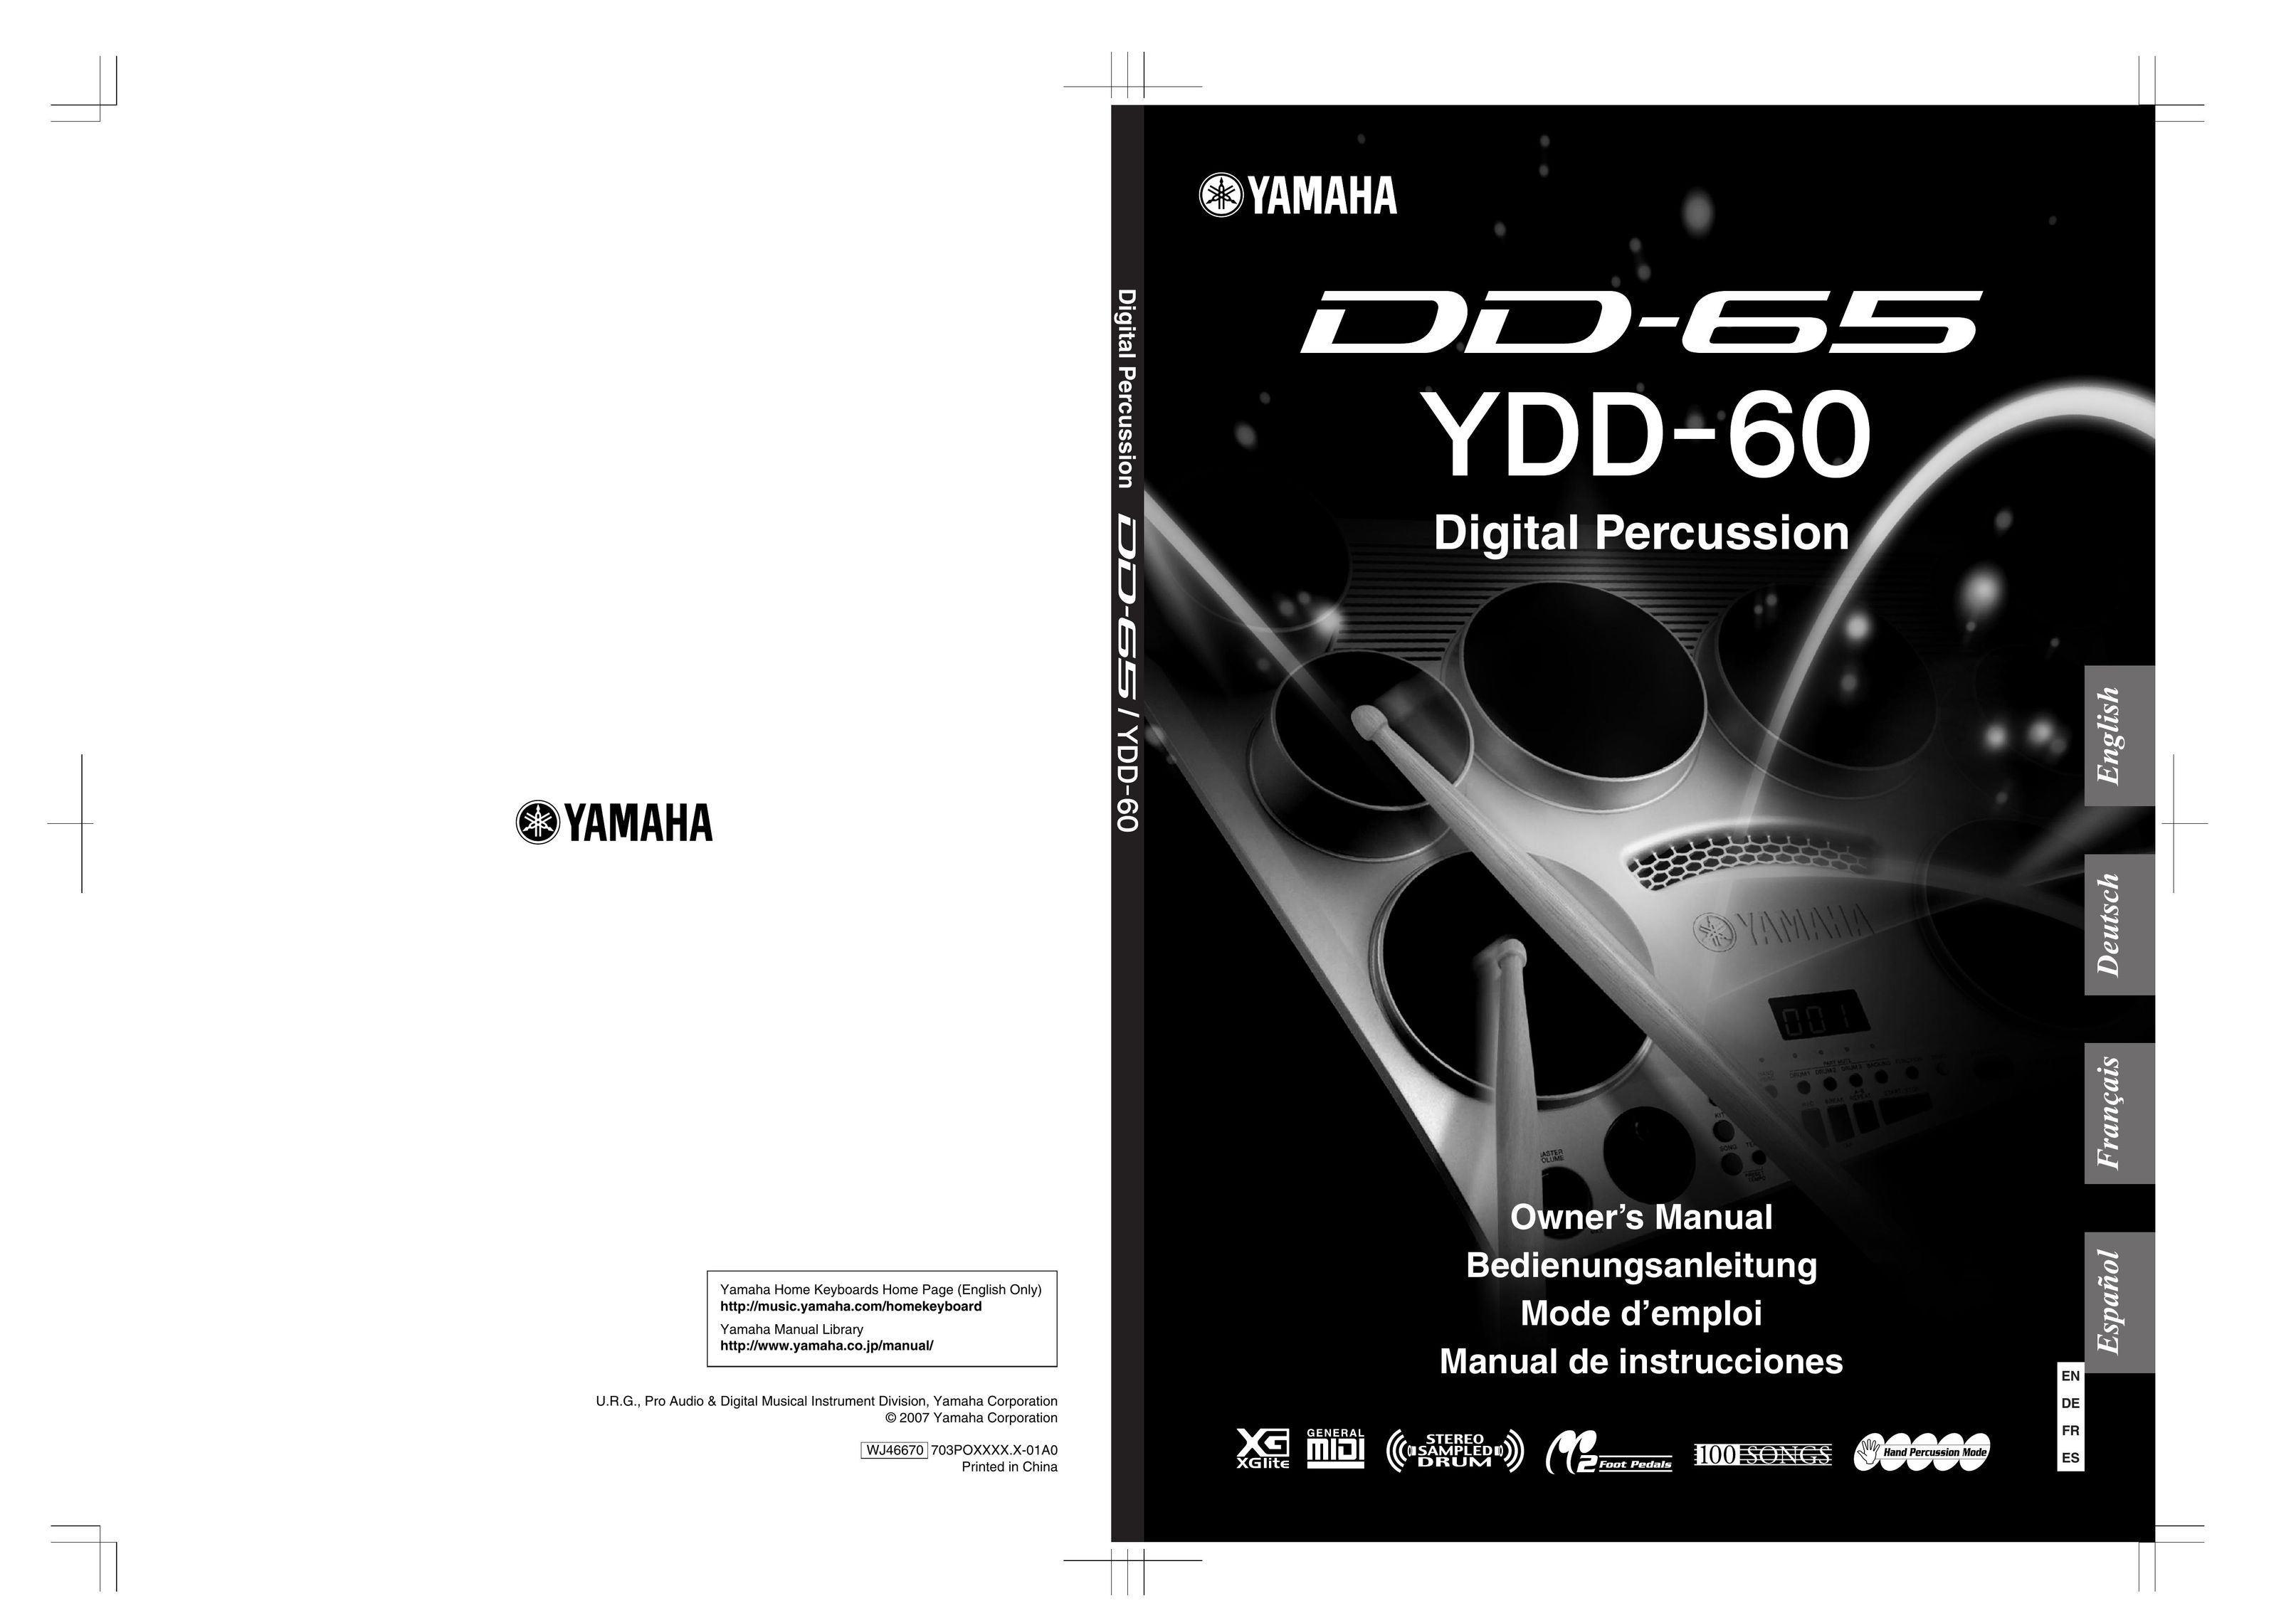 Yamaha YDD-60 Car Stereo System User Manual